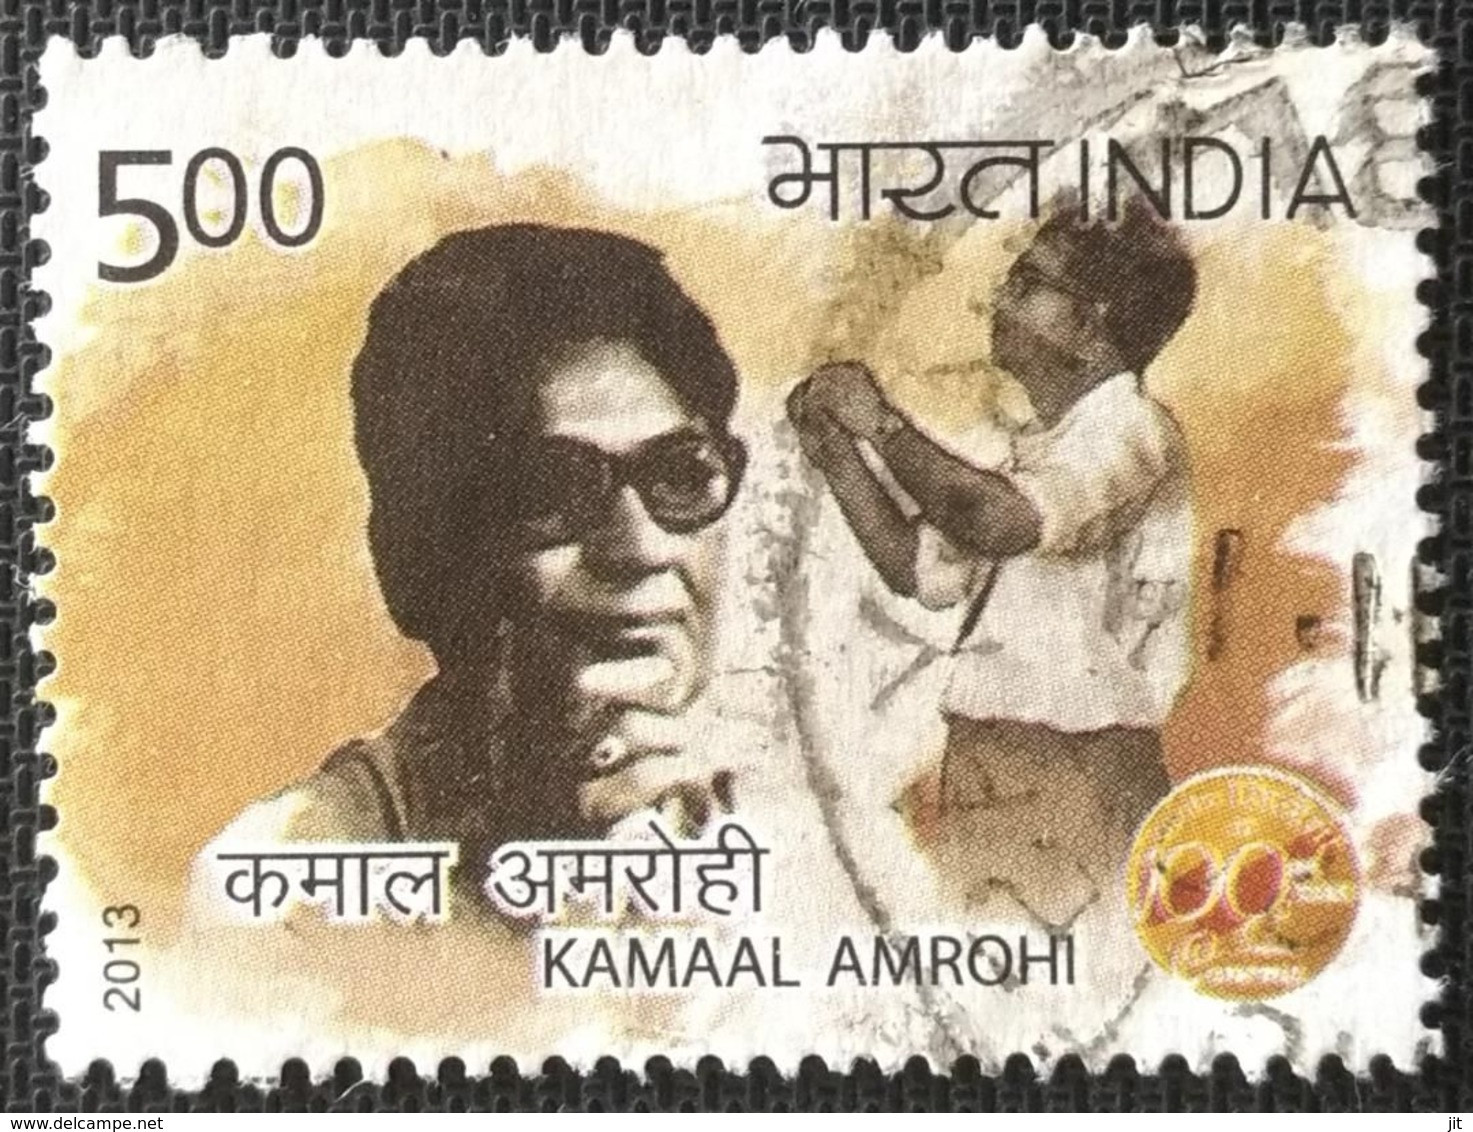 022. INDIA 2013 USED STAMP 100 YEARS OF INDIAN CINEMA (KAMAAL AMROHI) - Gebraucht